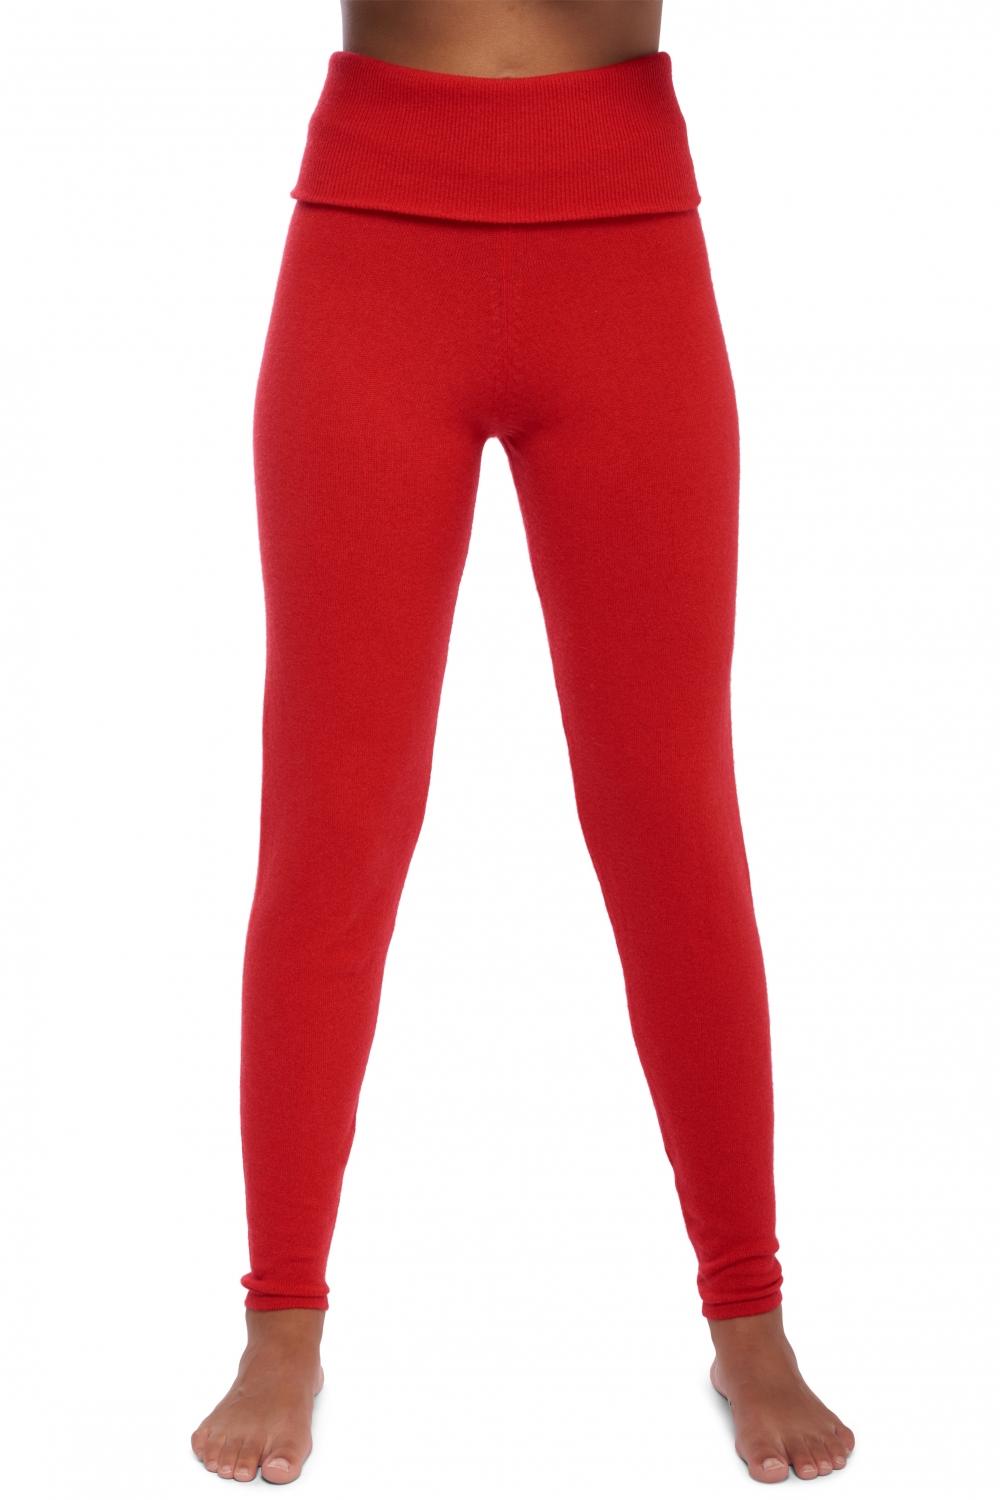 Cashmere accessoires kuschelwelt shirley rouge 2xl